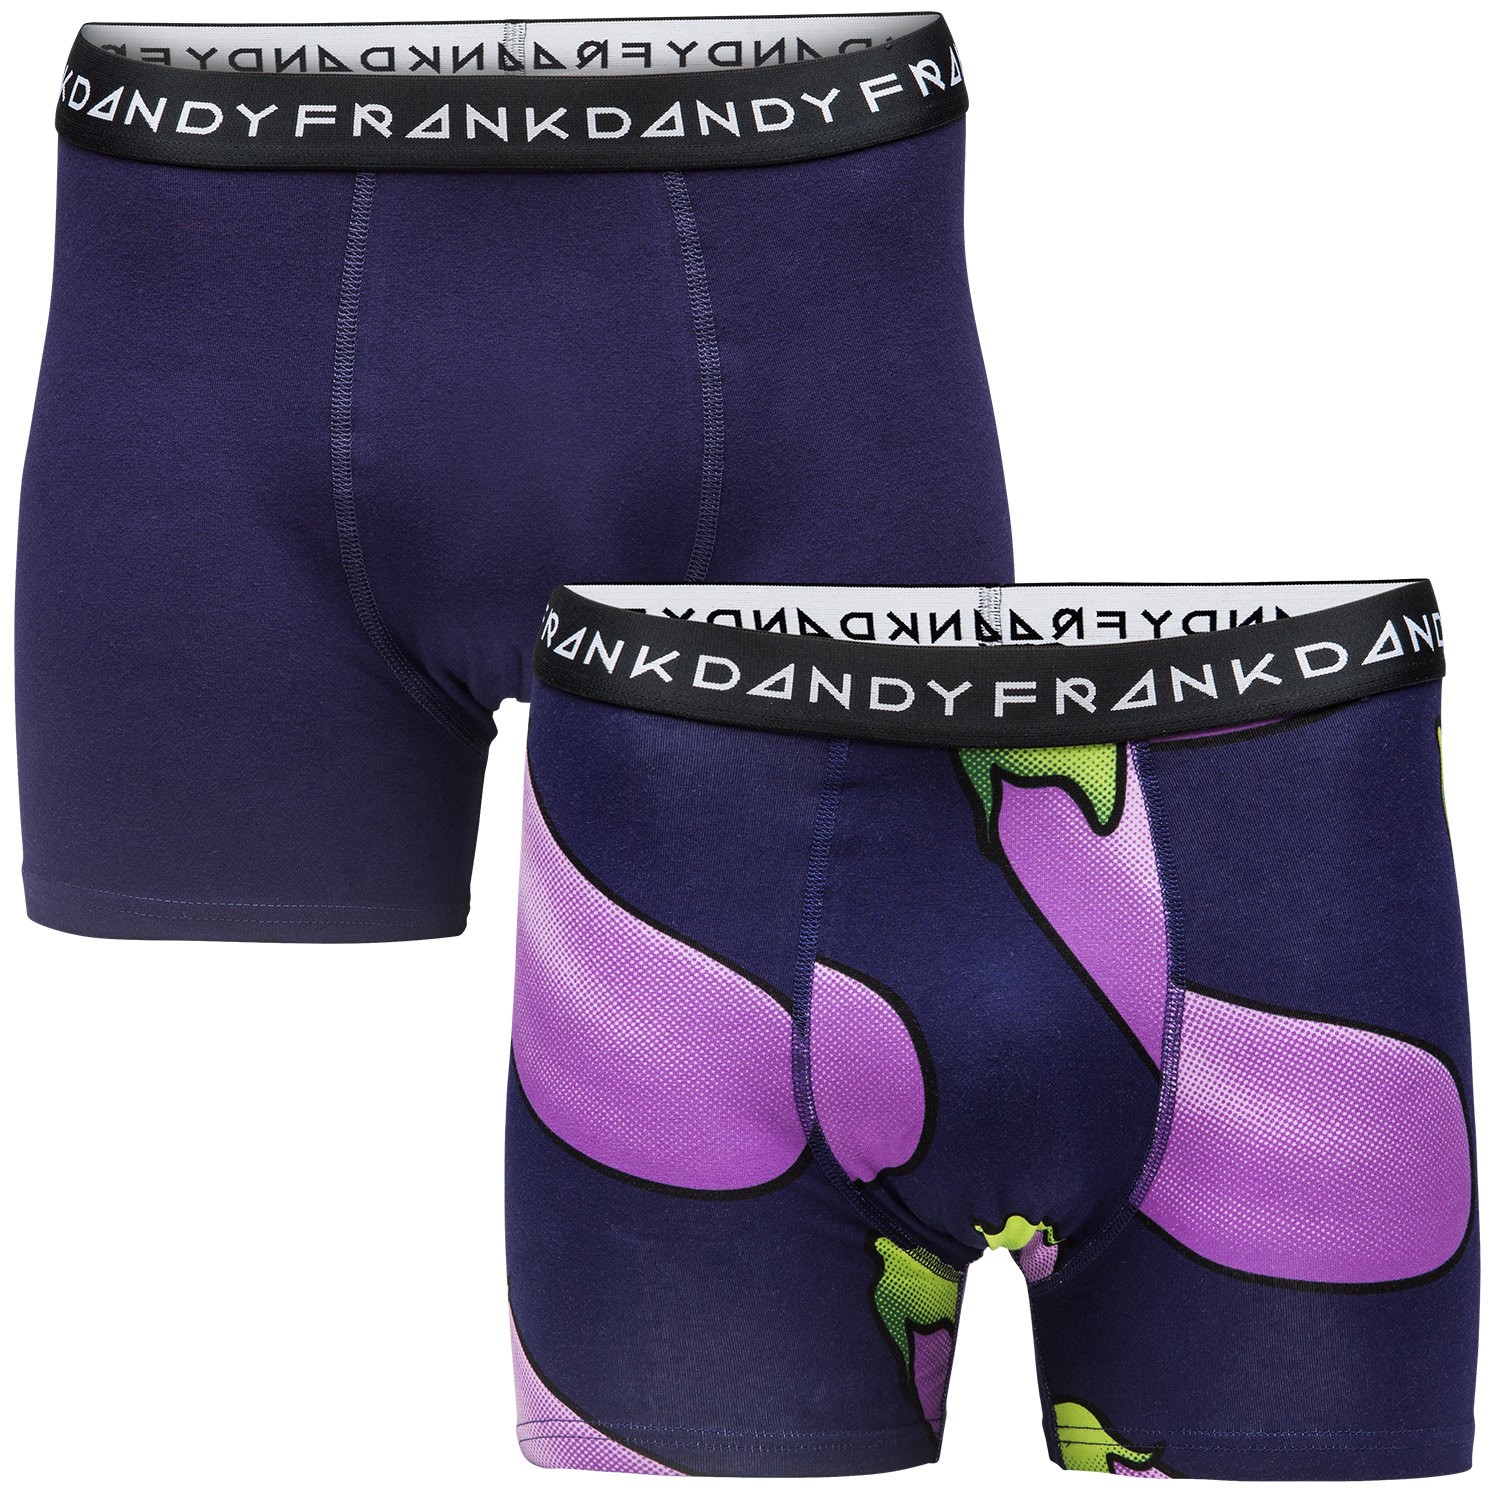 Frank Dandy Eggplant Boxer